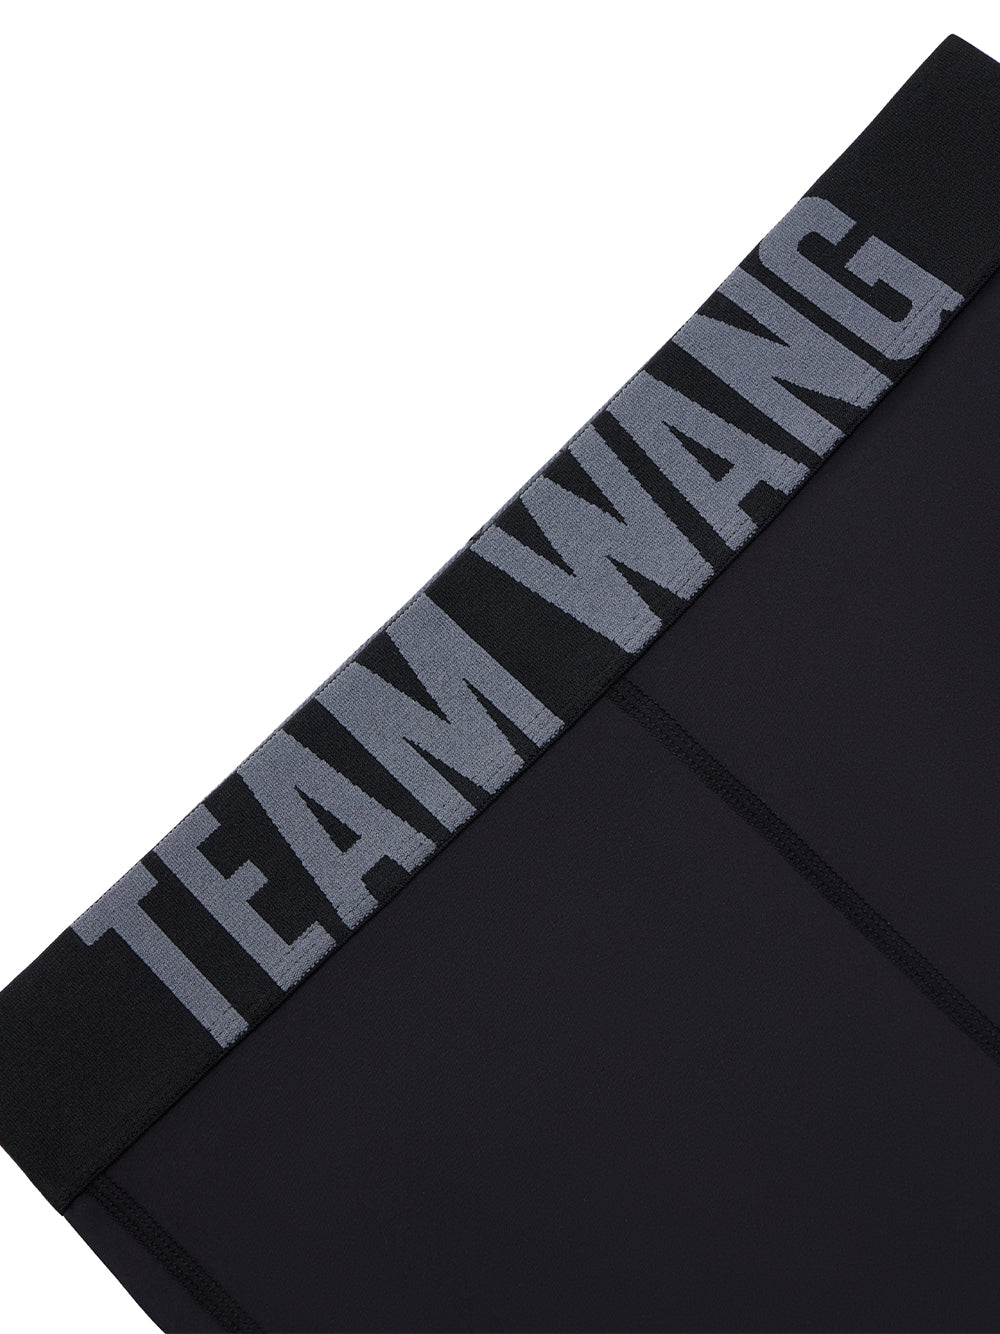 Team-Wang-Design-THE-ORIGINAL-1-Biker-Shorts-Black-5